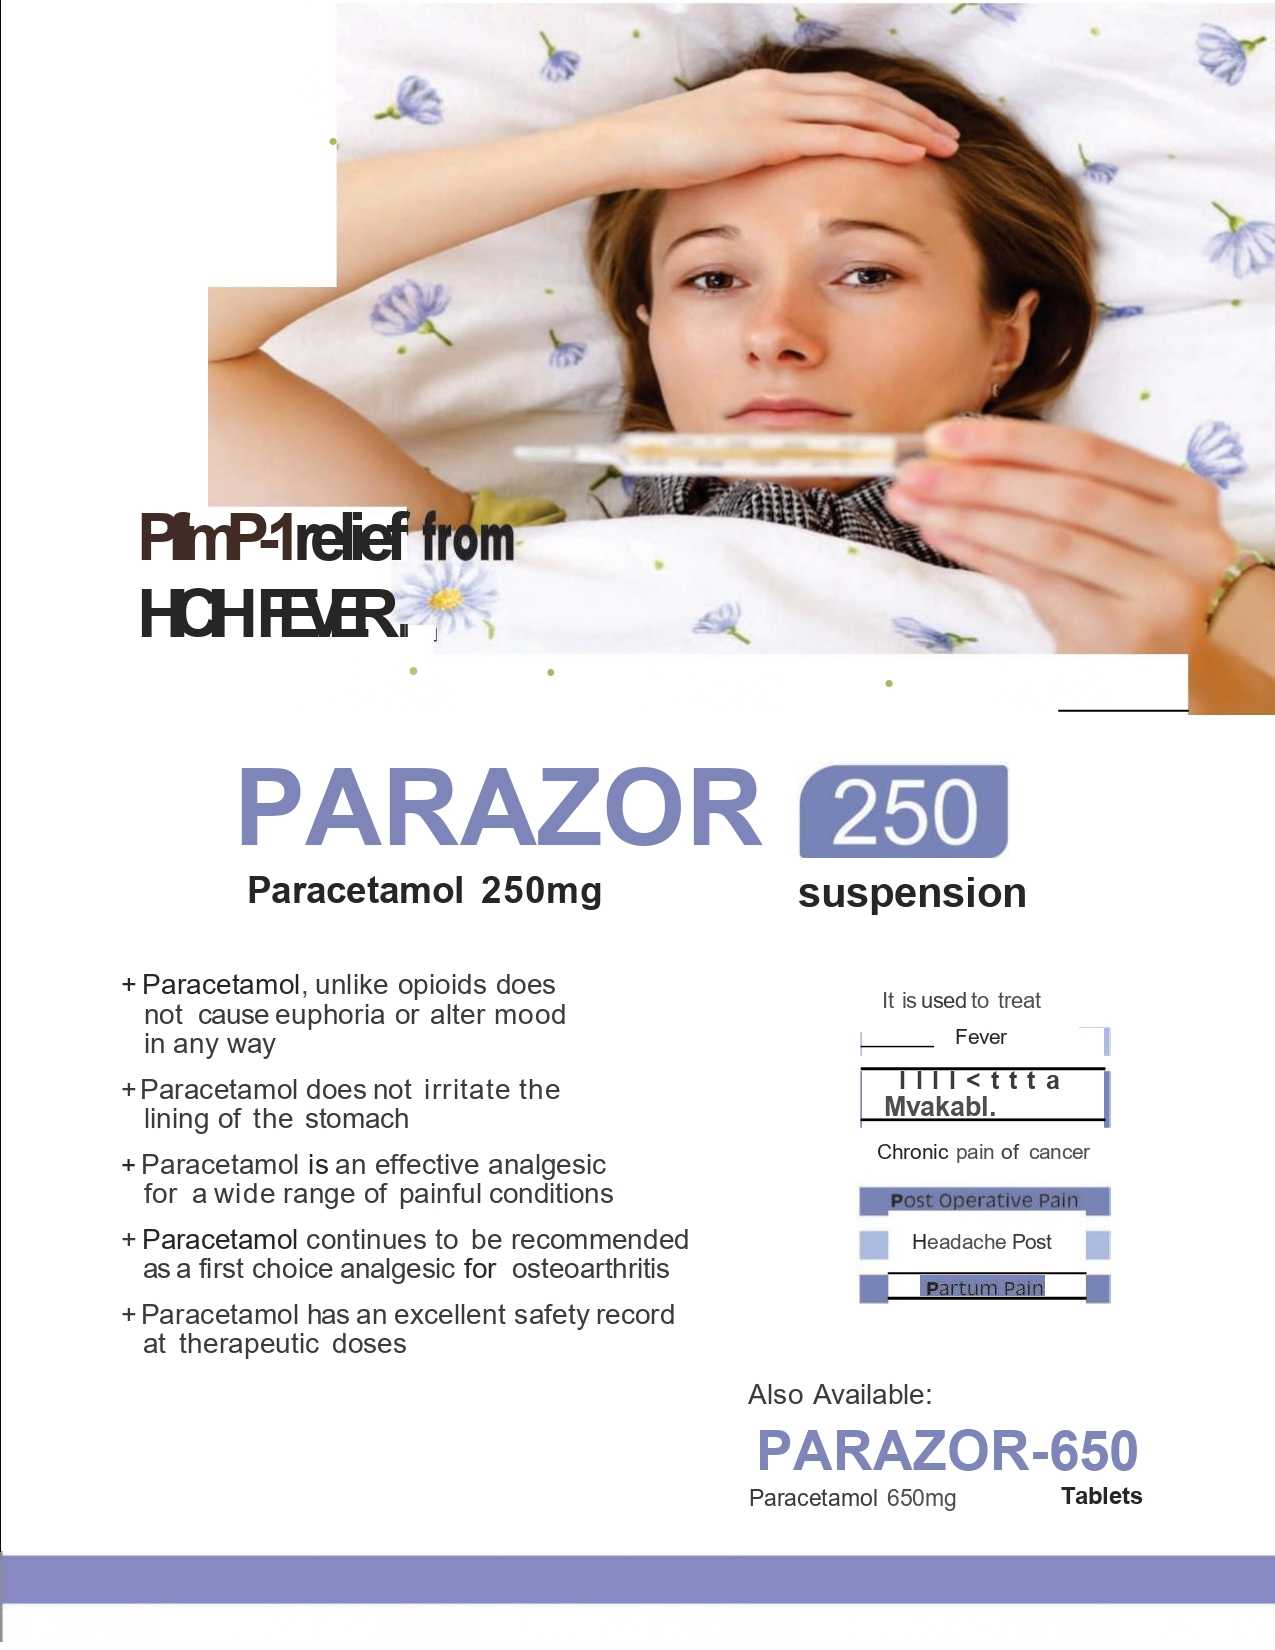 PARAZOR-650